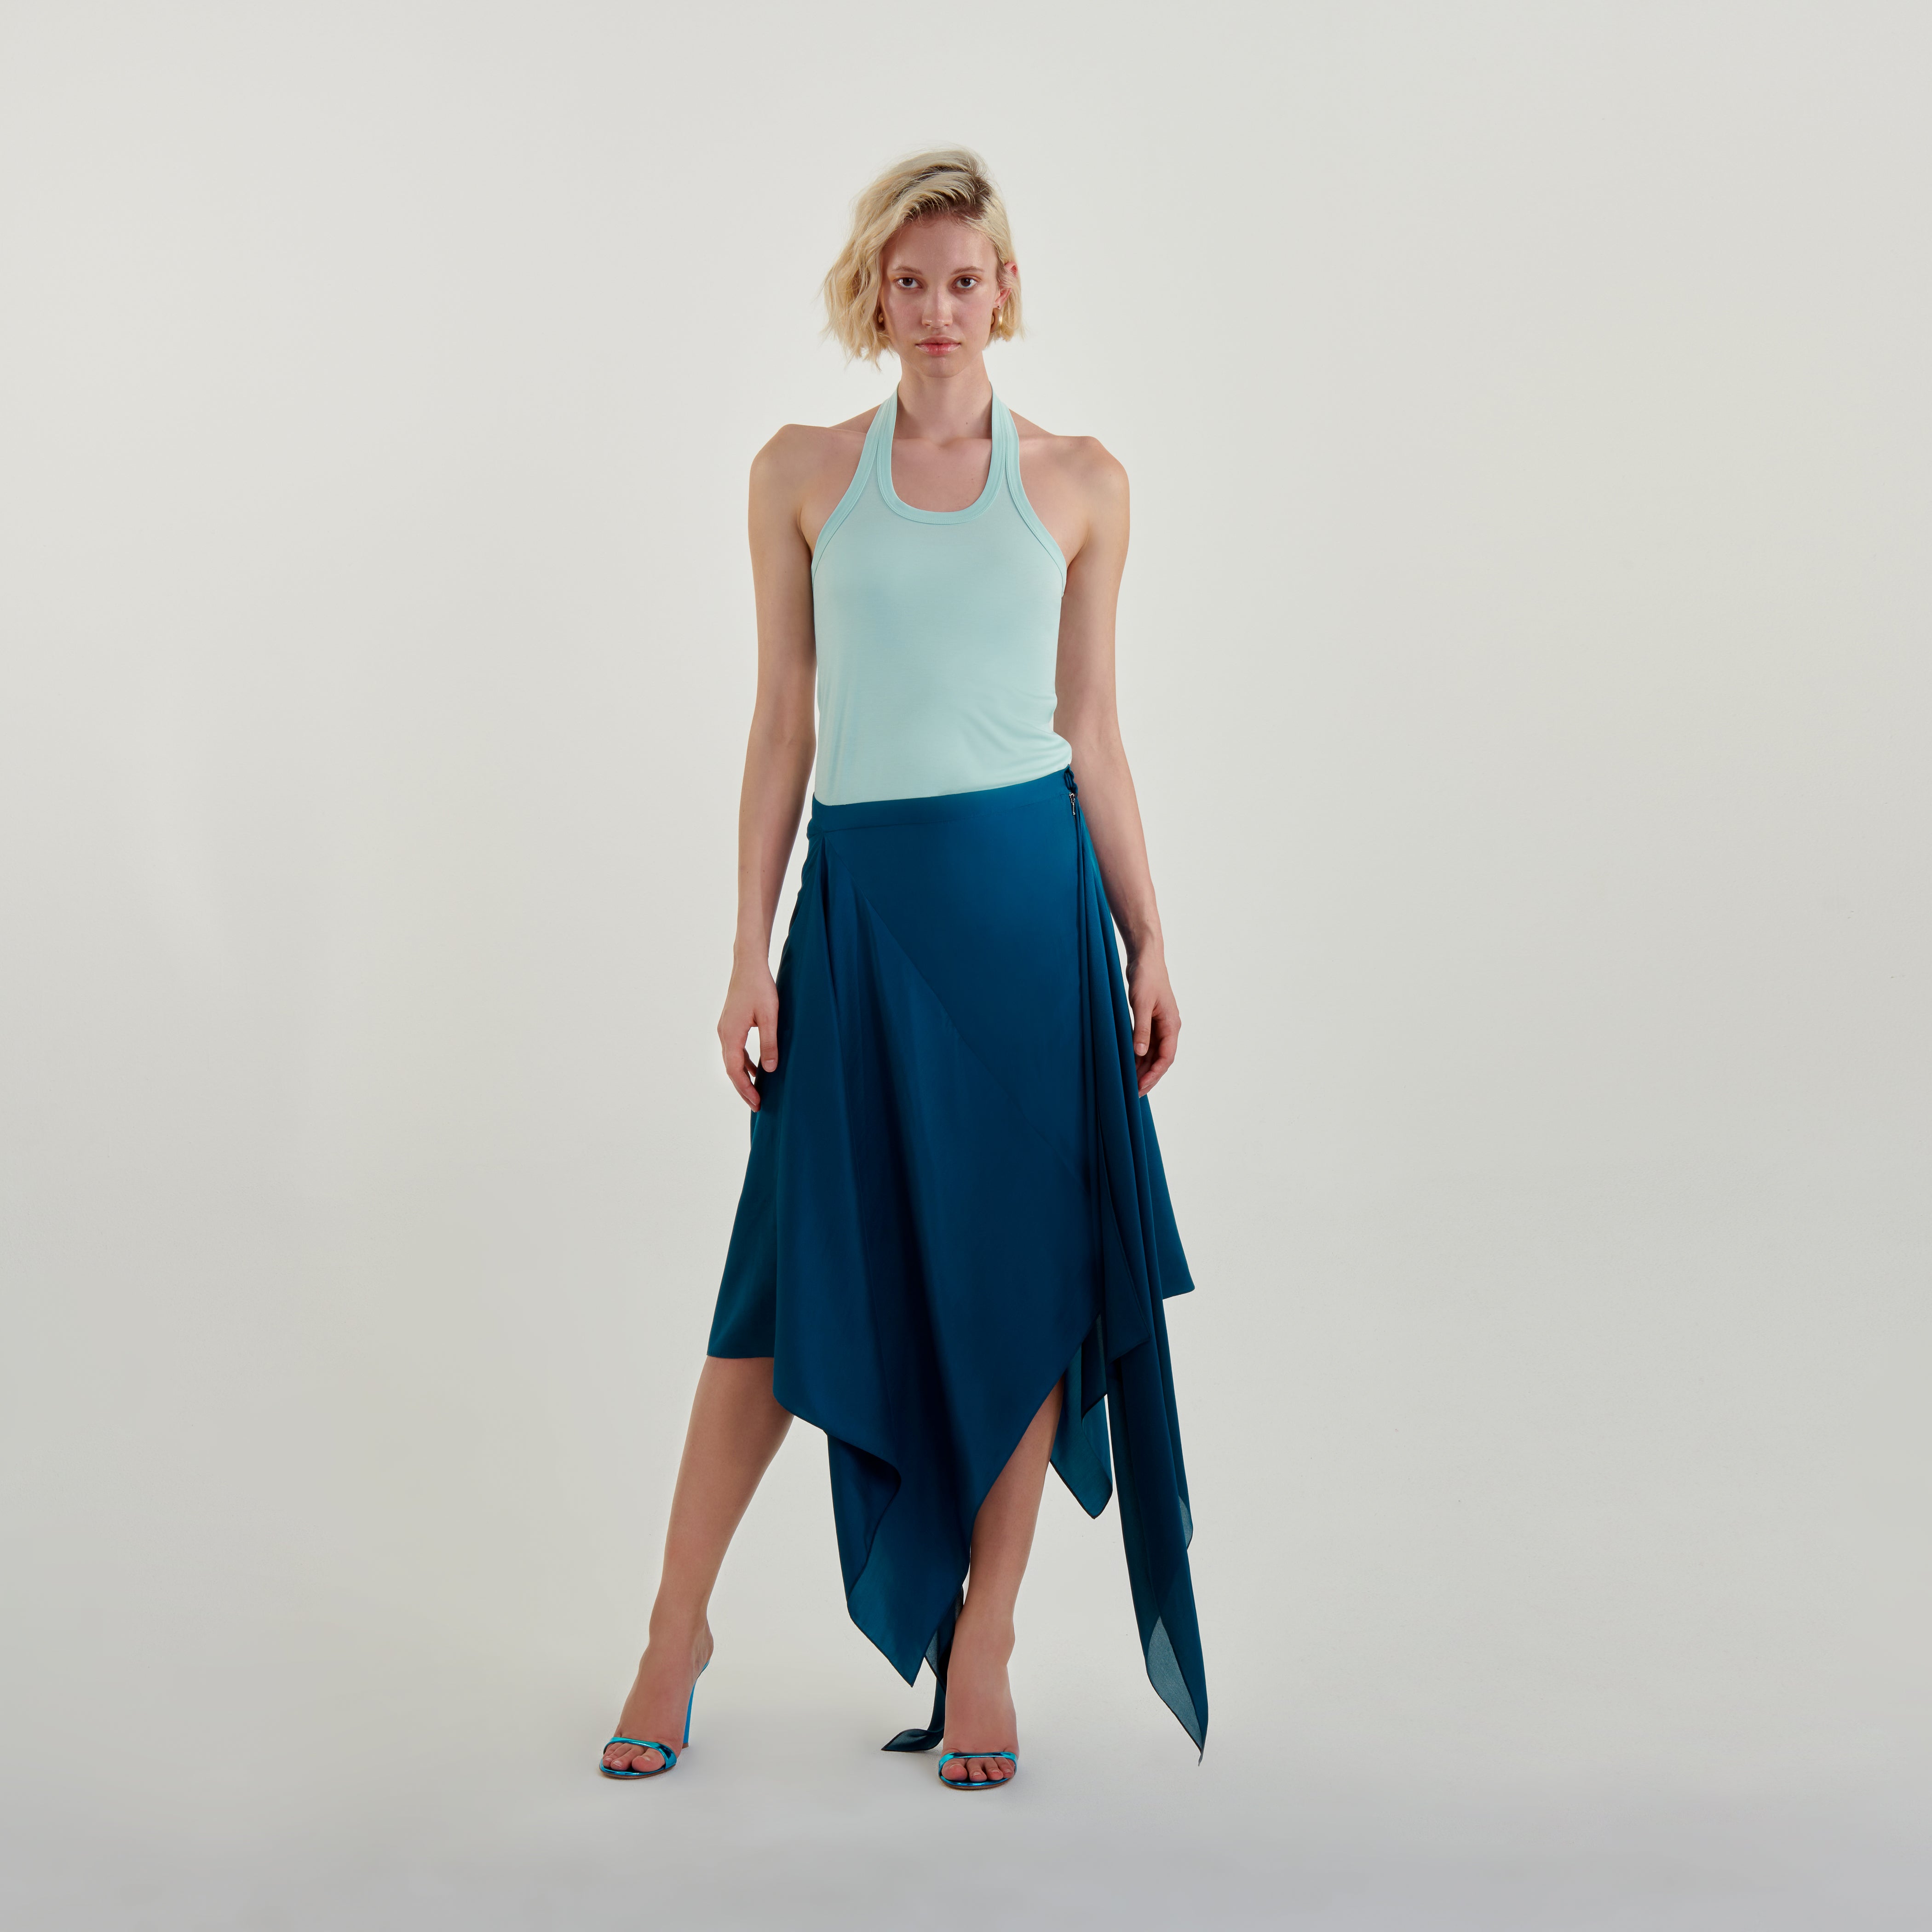 Gemini Skirt in cobalt | Lara Chamandi